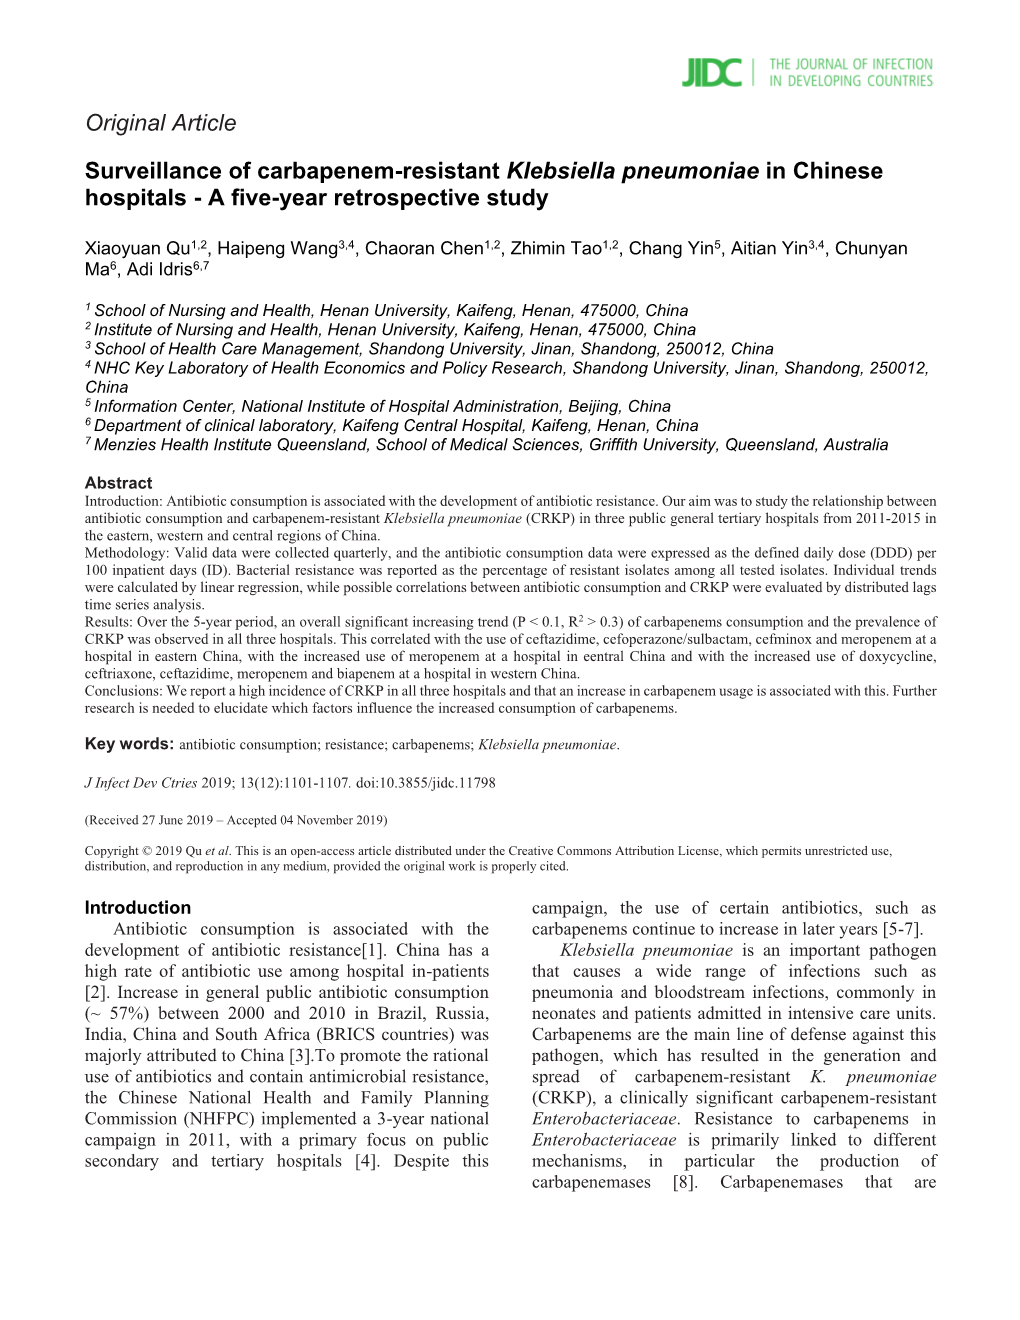 Surveillance of Carbapenem-Resistant Klebsiella Pneumoniae in Chinese Hospitals - a Five-Year Retrospective Study